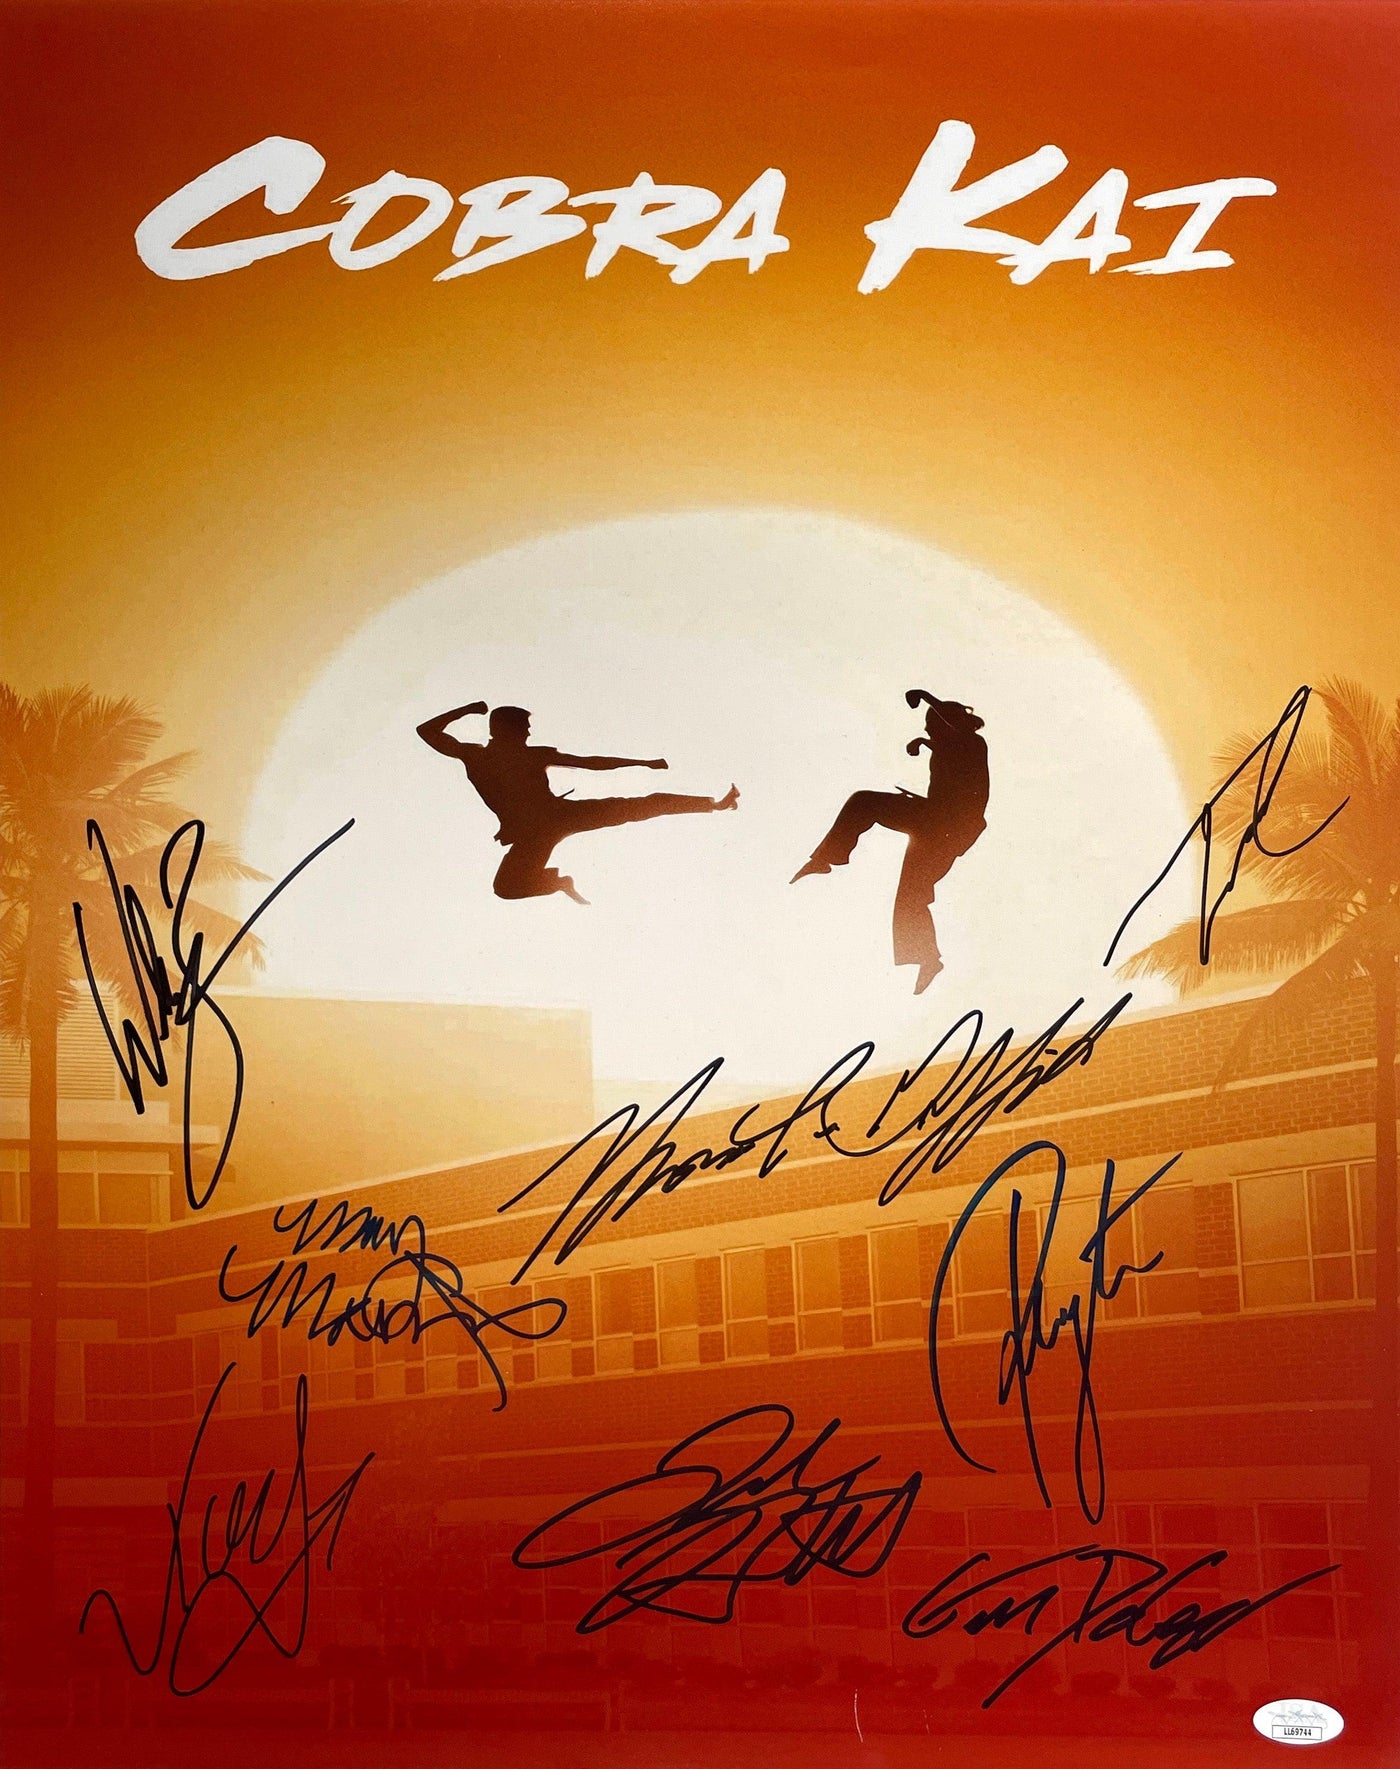 Cobra Kai Cast Signed 16x20 Photograph Autographed JSA COA - The Karate Kid